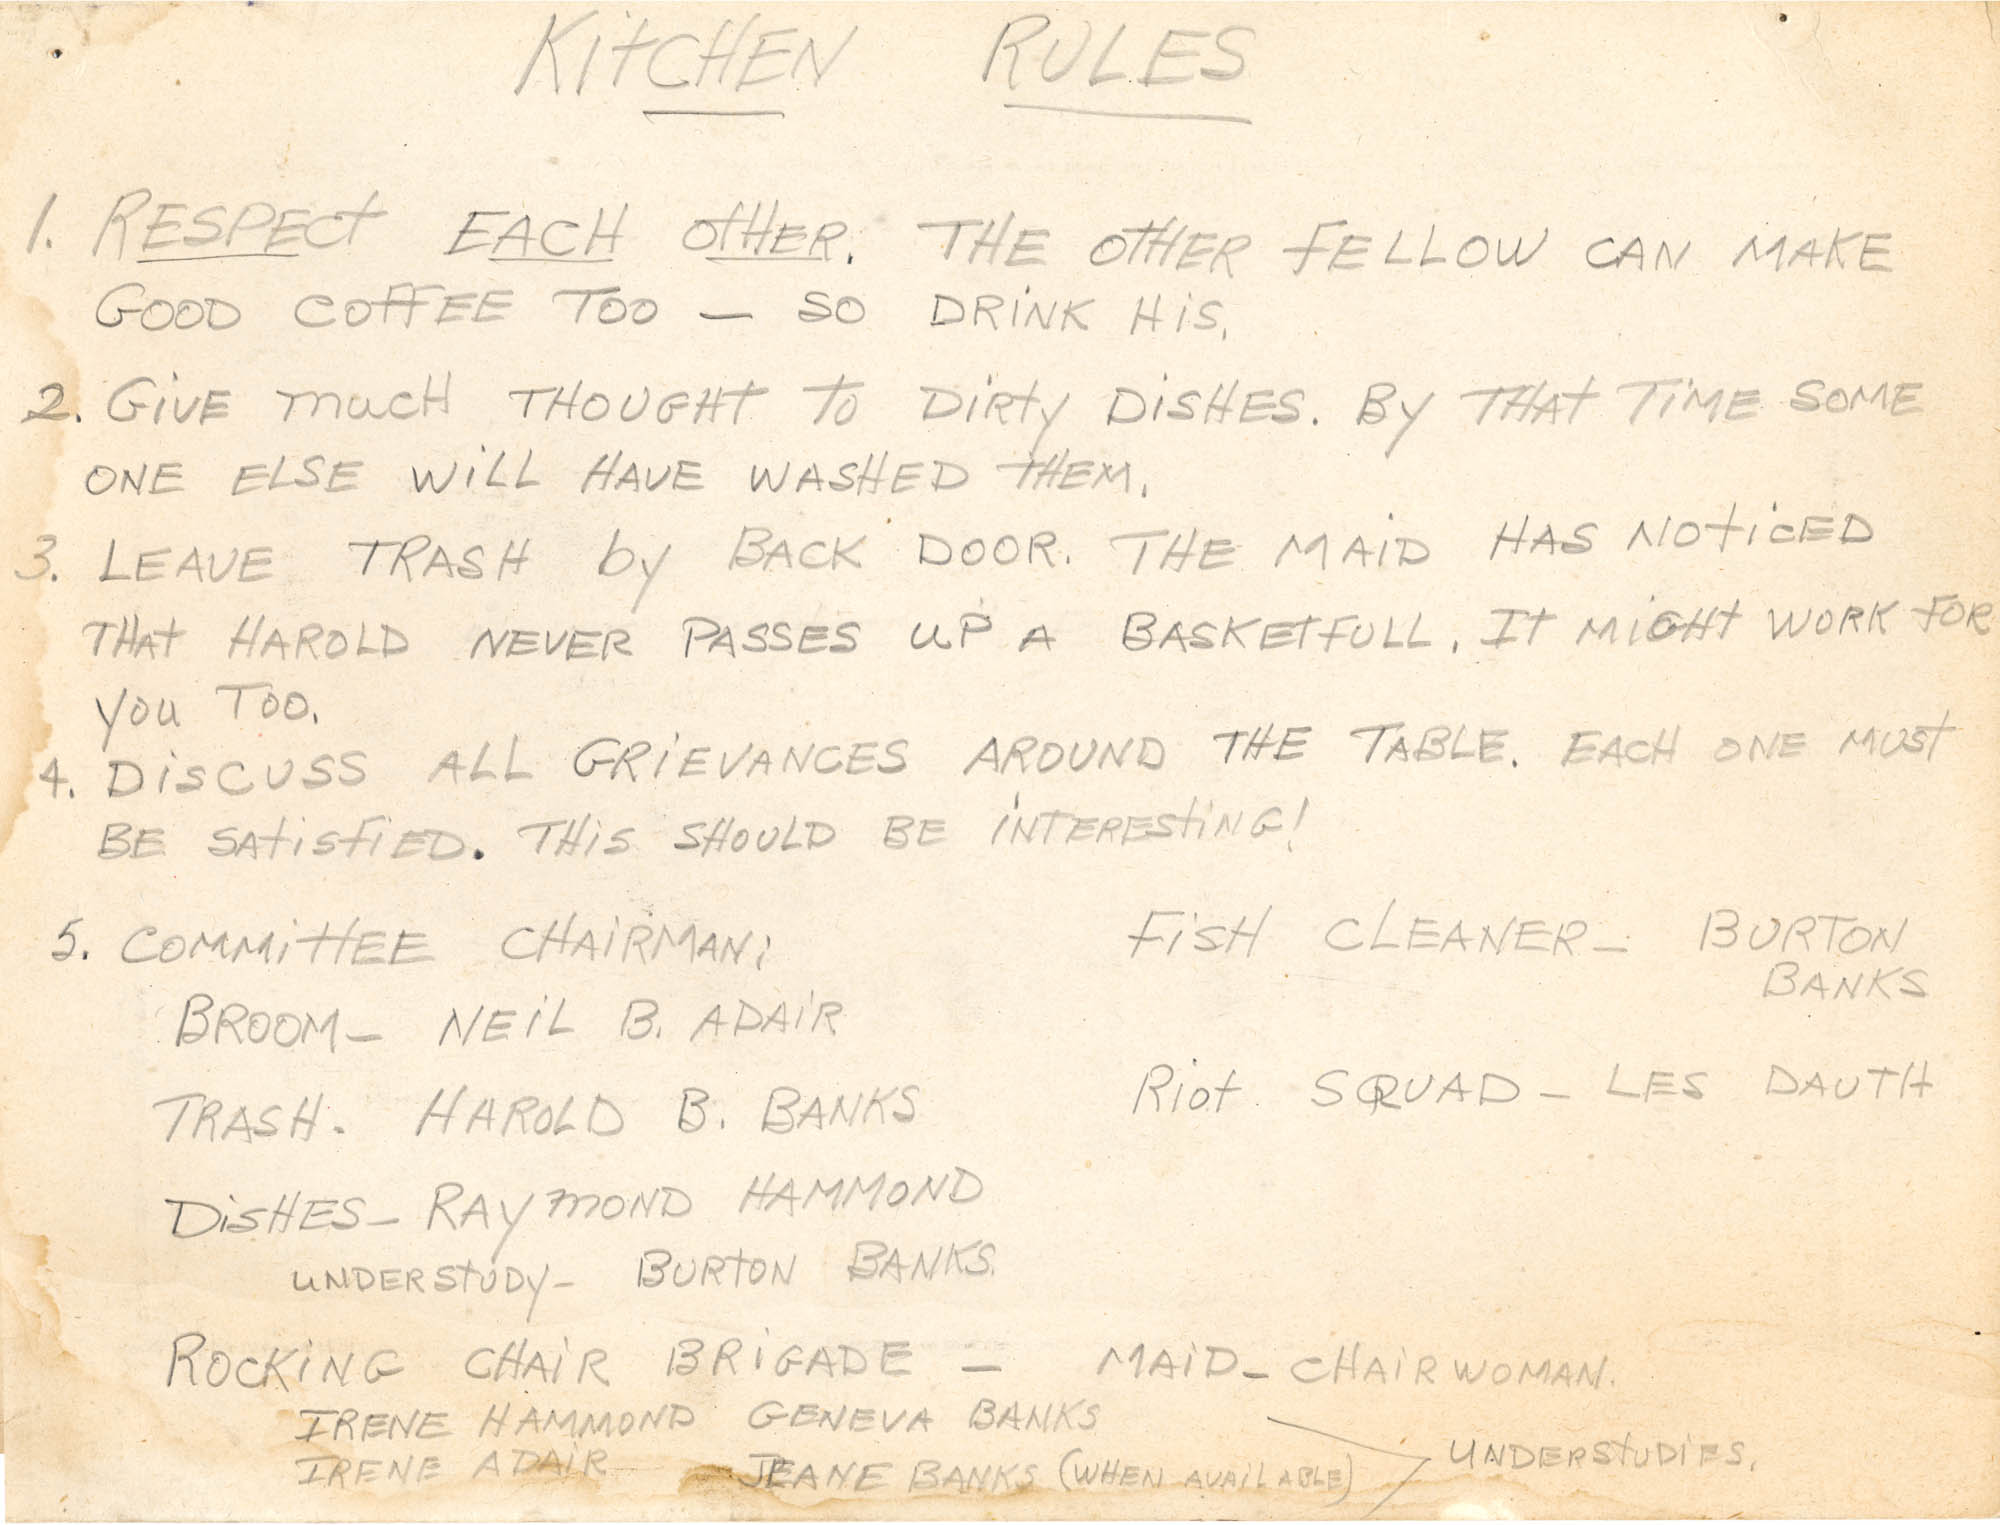 Idlewild Lodge - idlewildlodge.github.io - Circa 1950s - Idlewild Lodge Kitchen Rules